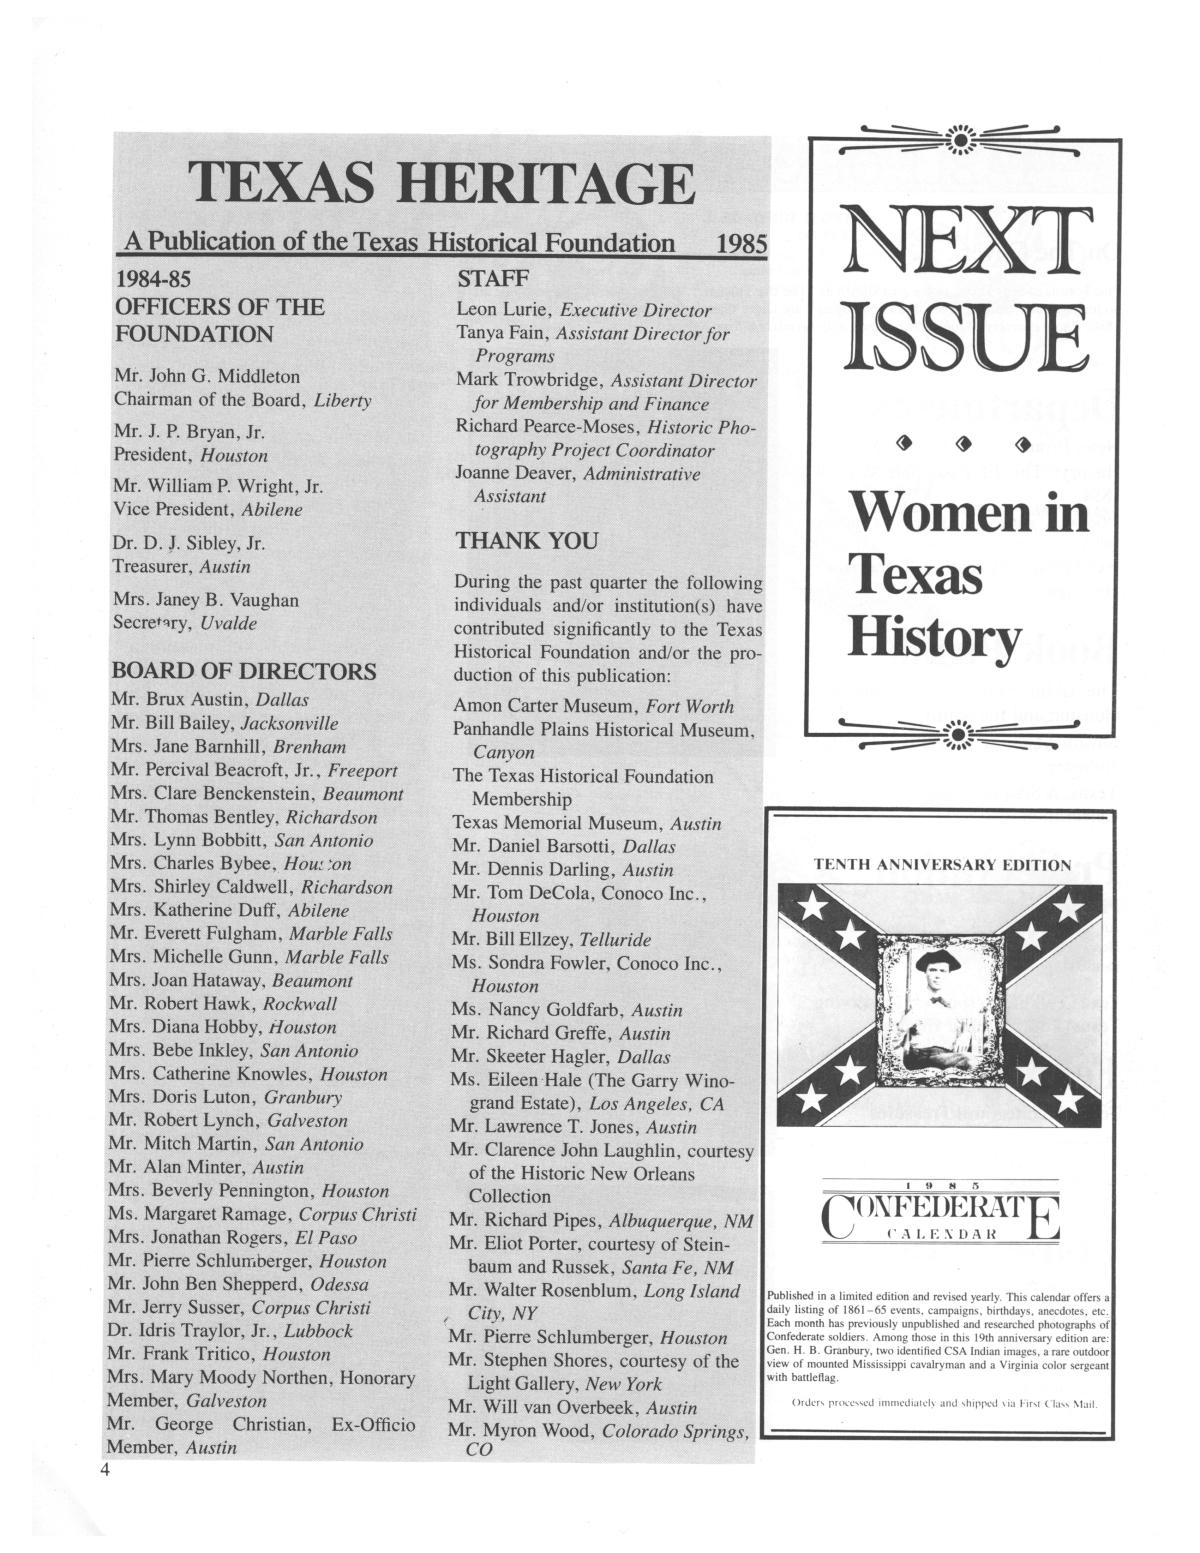 Texas Heritage, Winter 1985
                                                
                                                    4
                                                